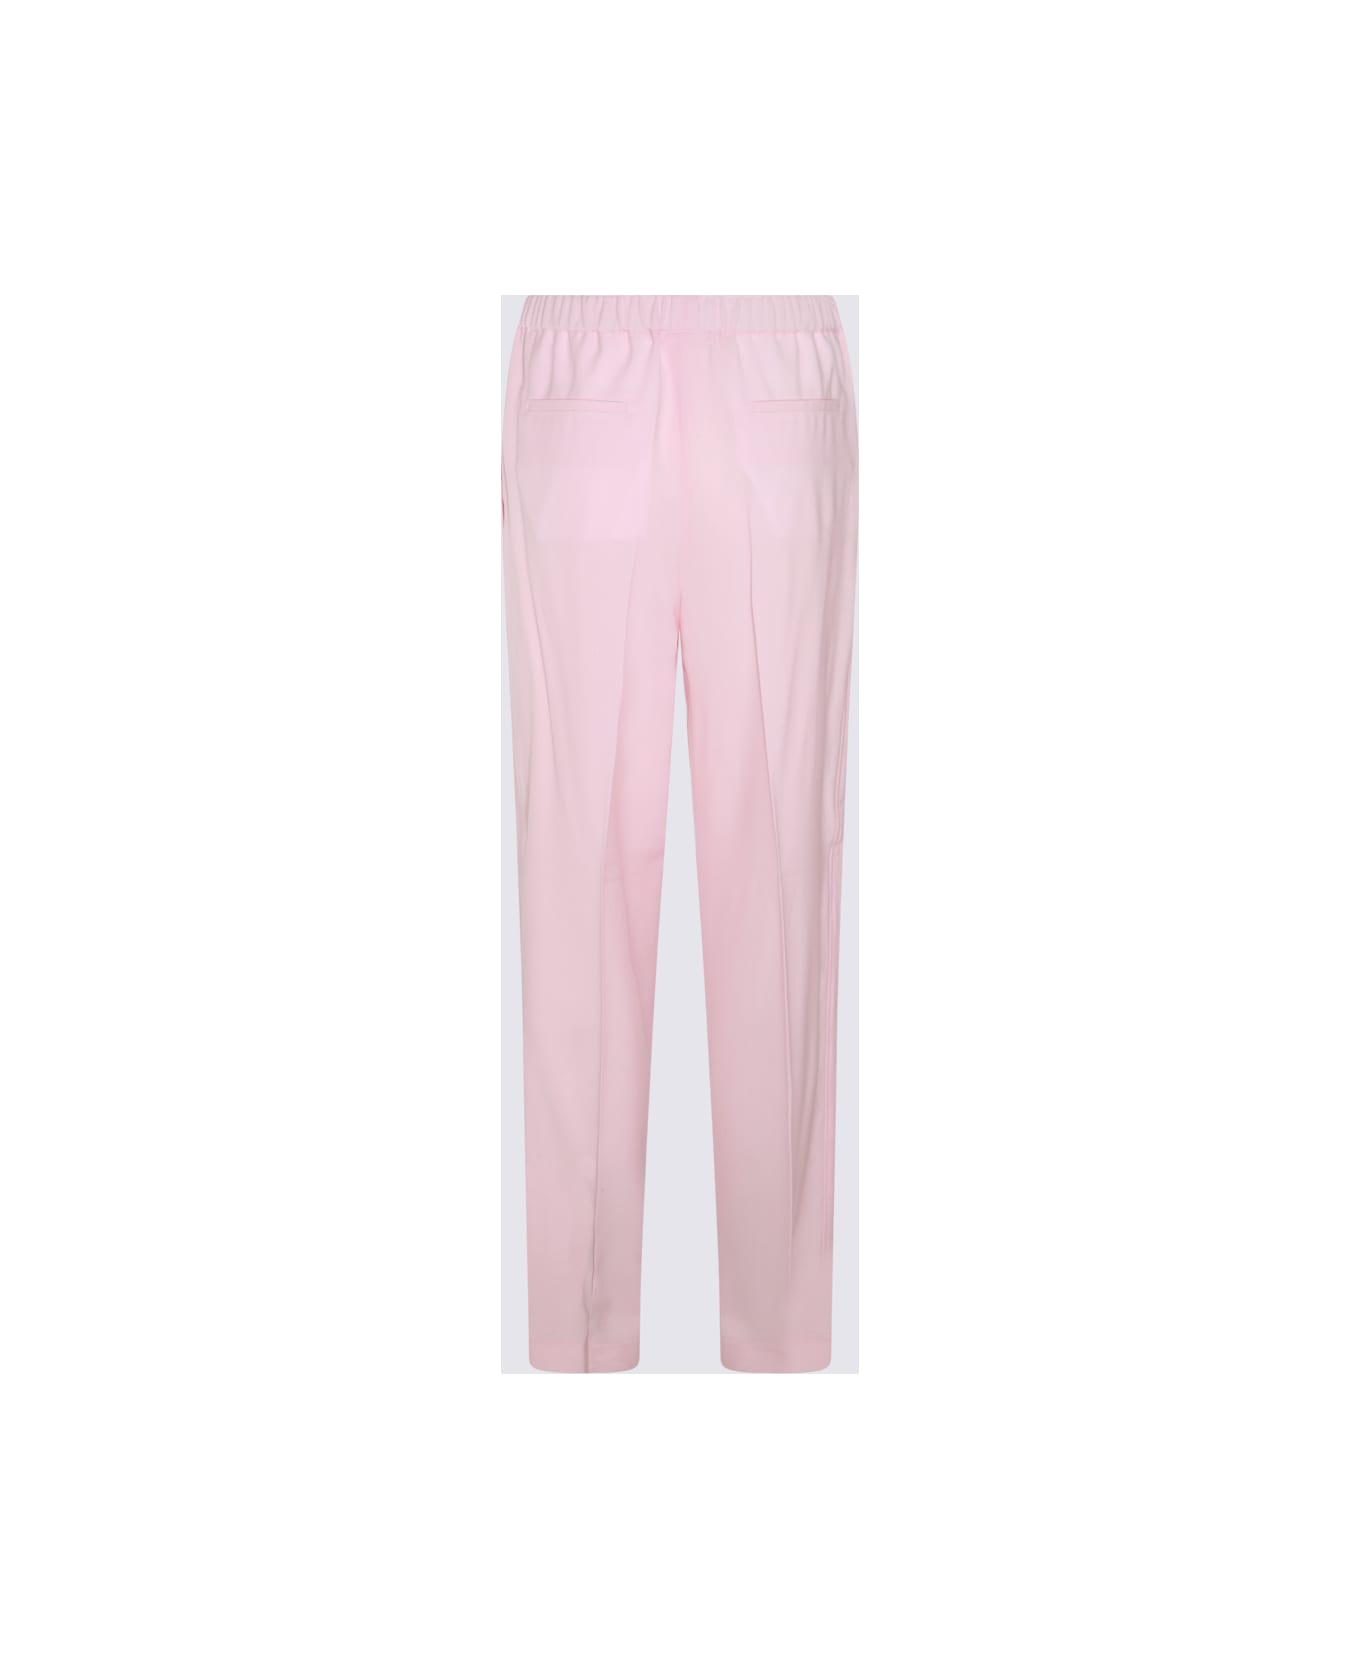 Fabiana Filippi Pink Pants - Pink